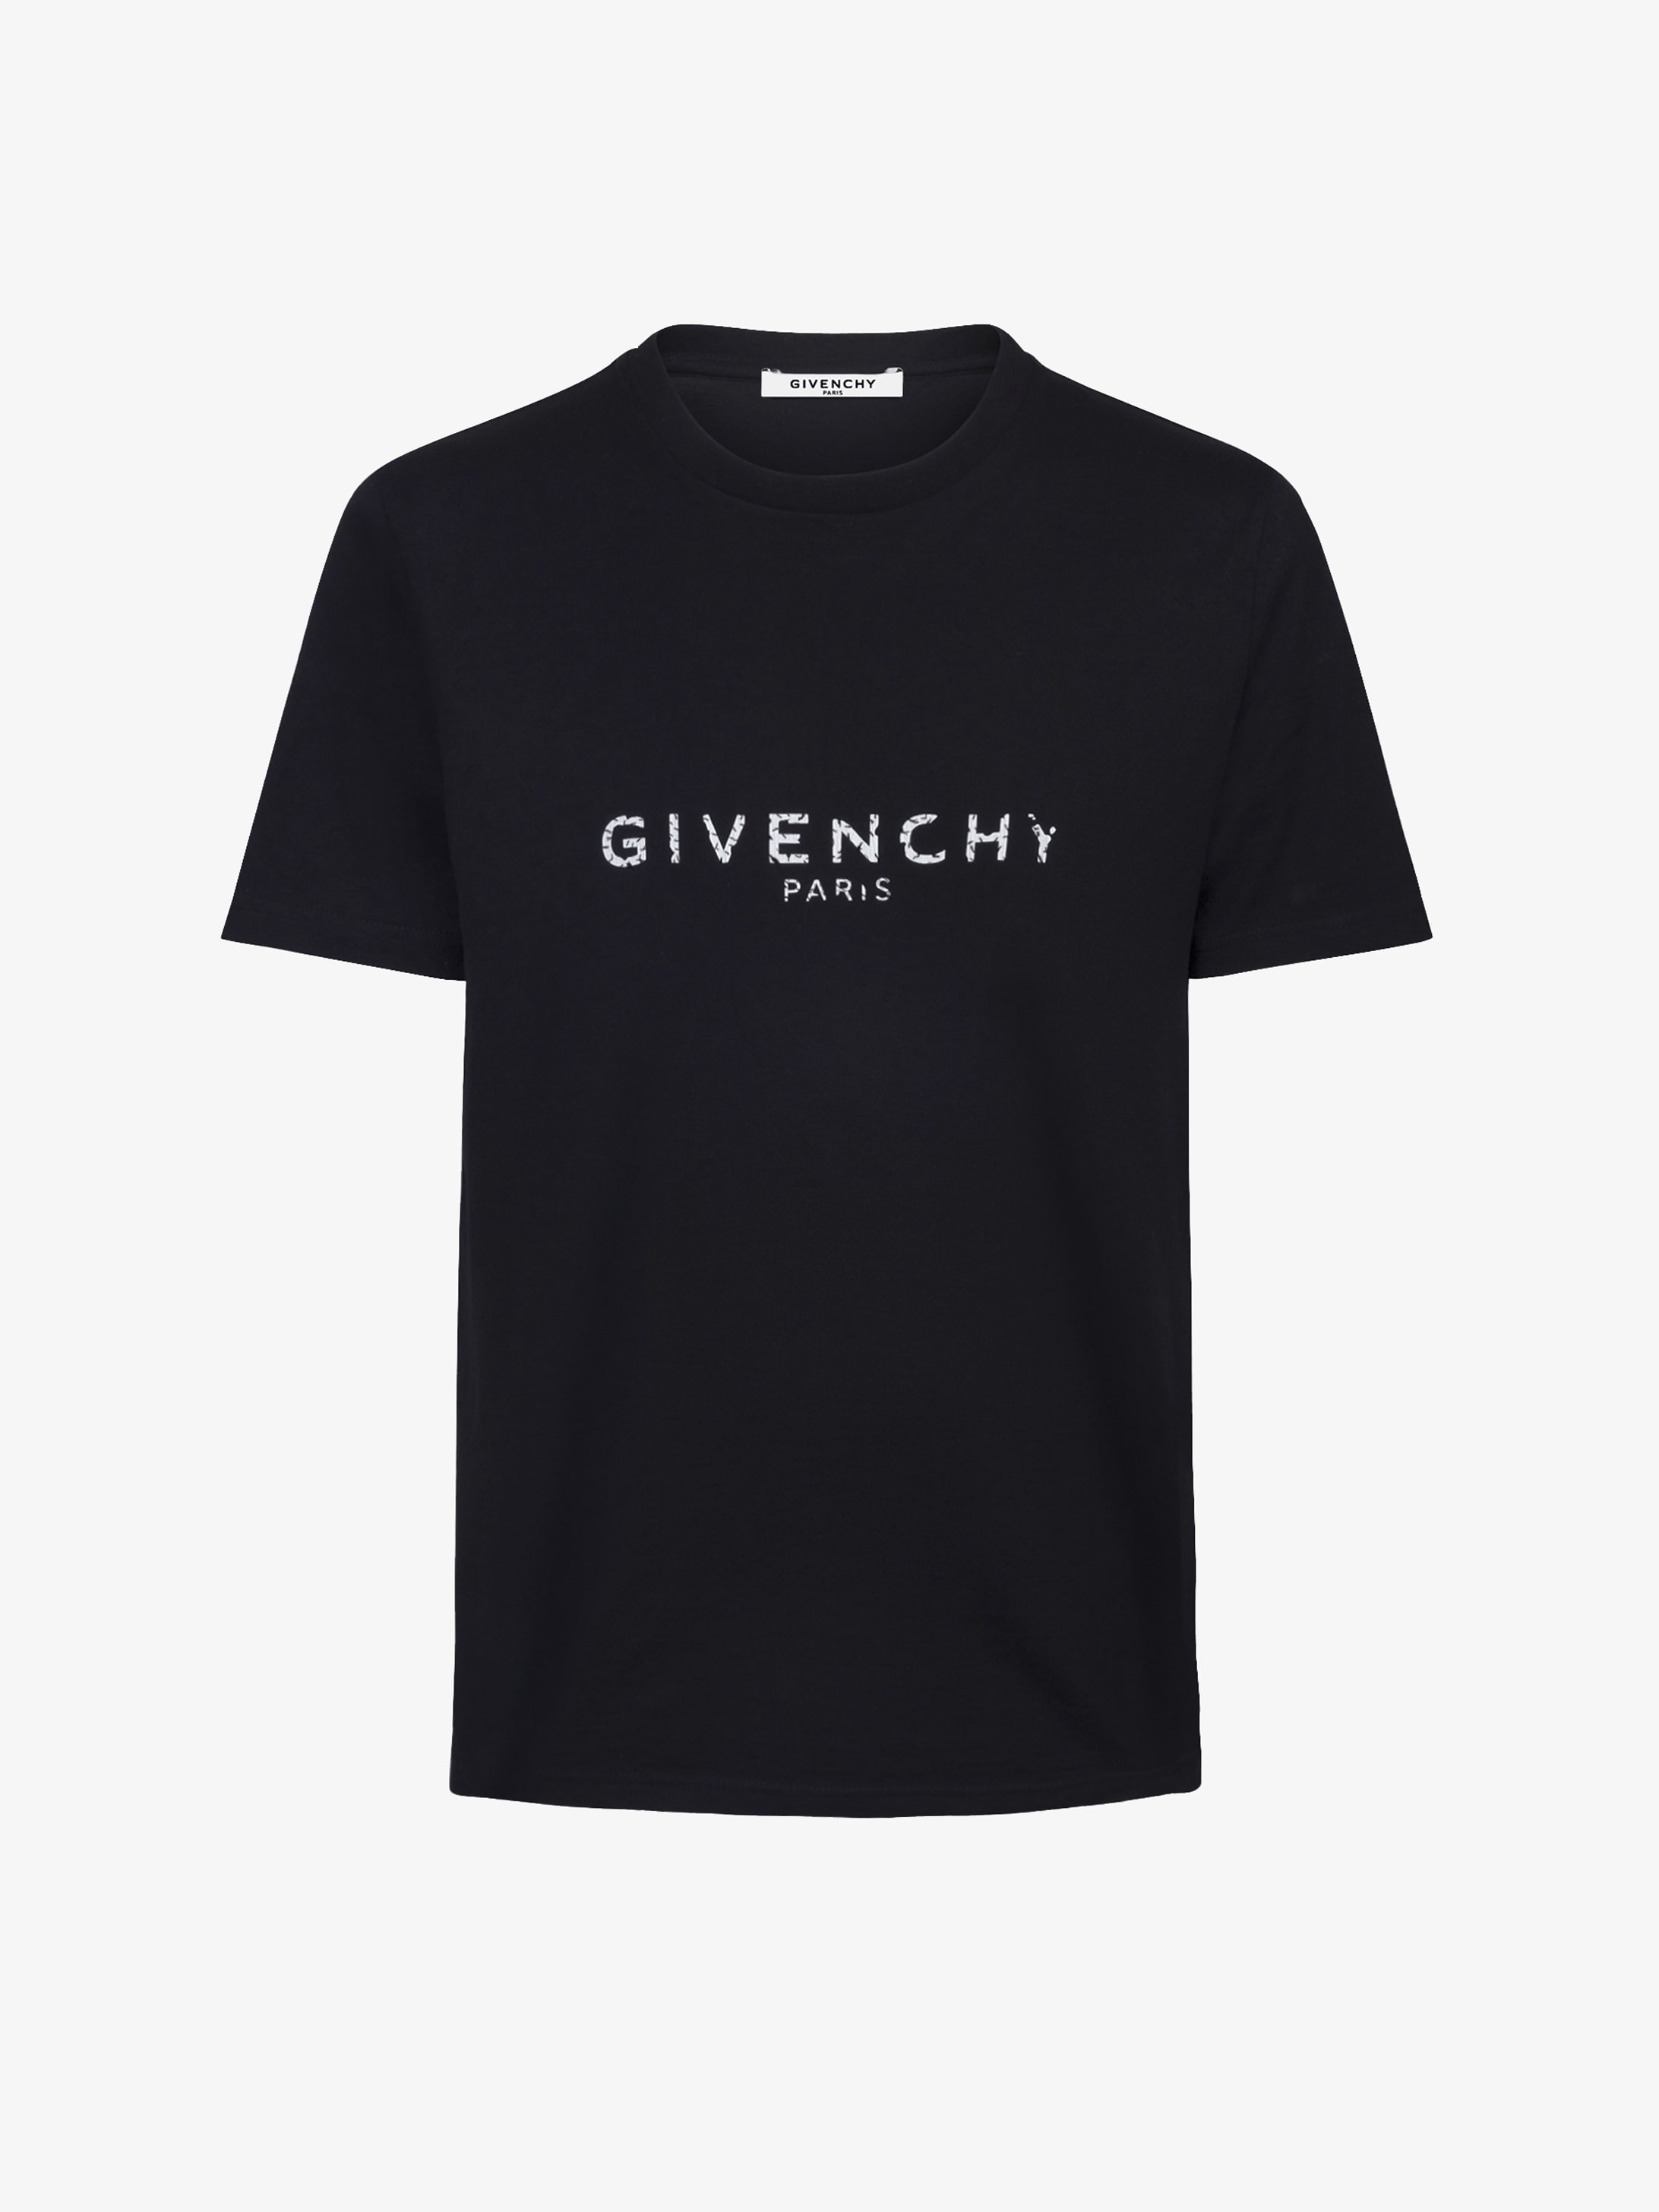 GIVENCHY PARIS oversized t-shirt | GIVENCHY Paris